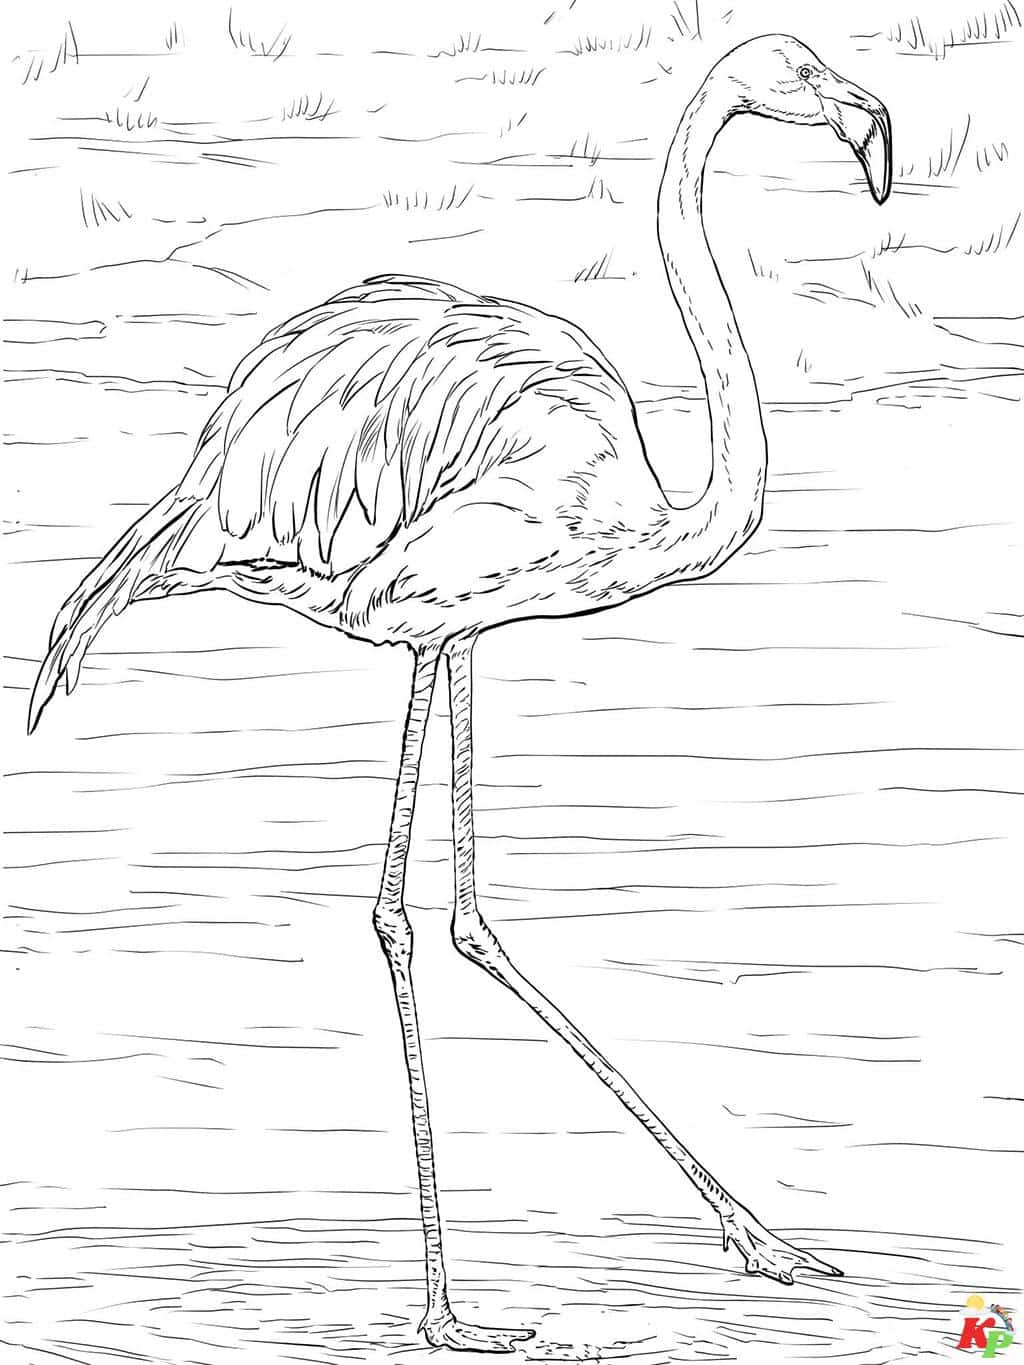 Flamingo22